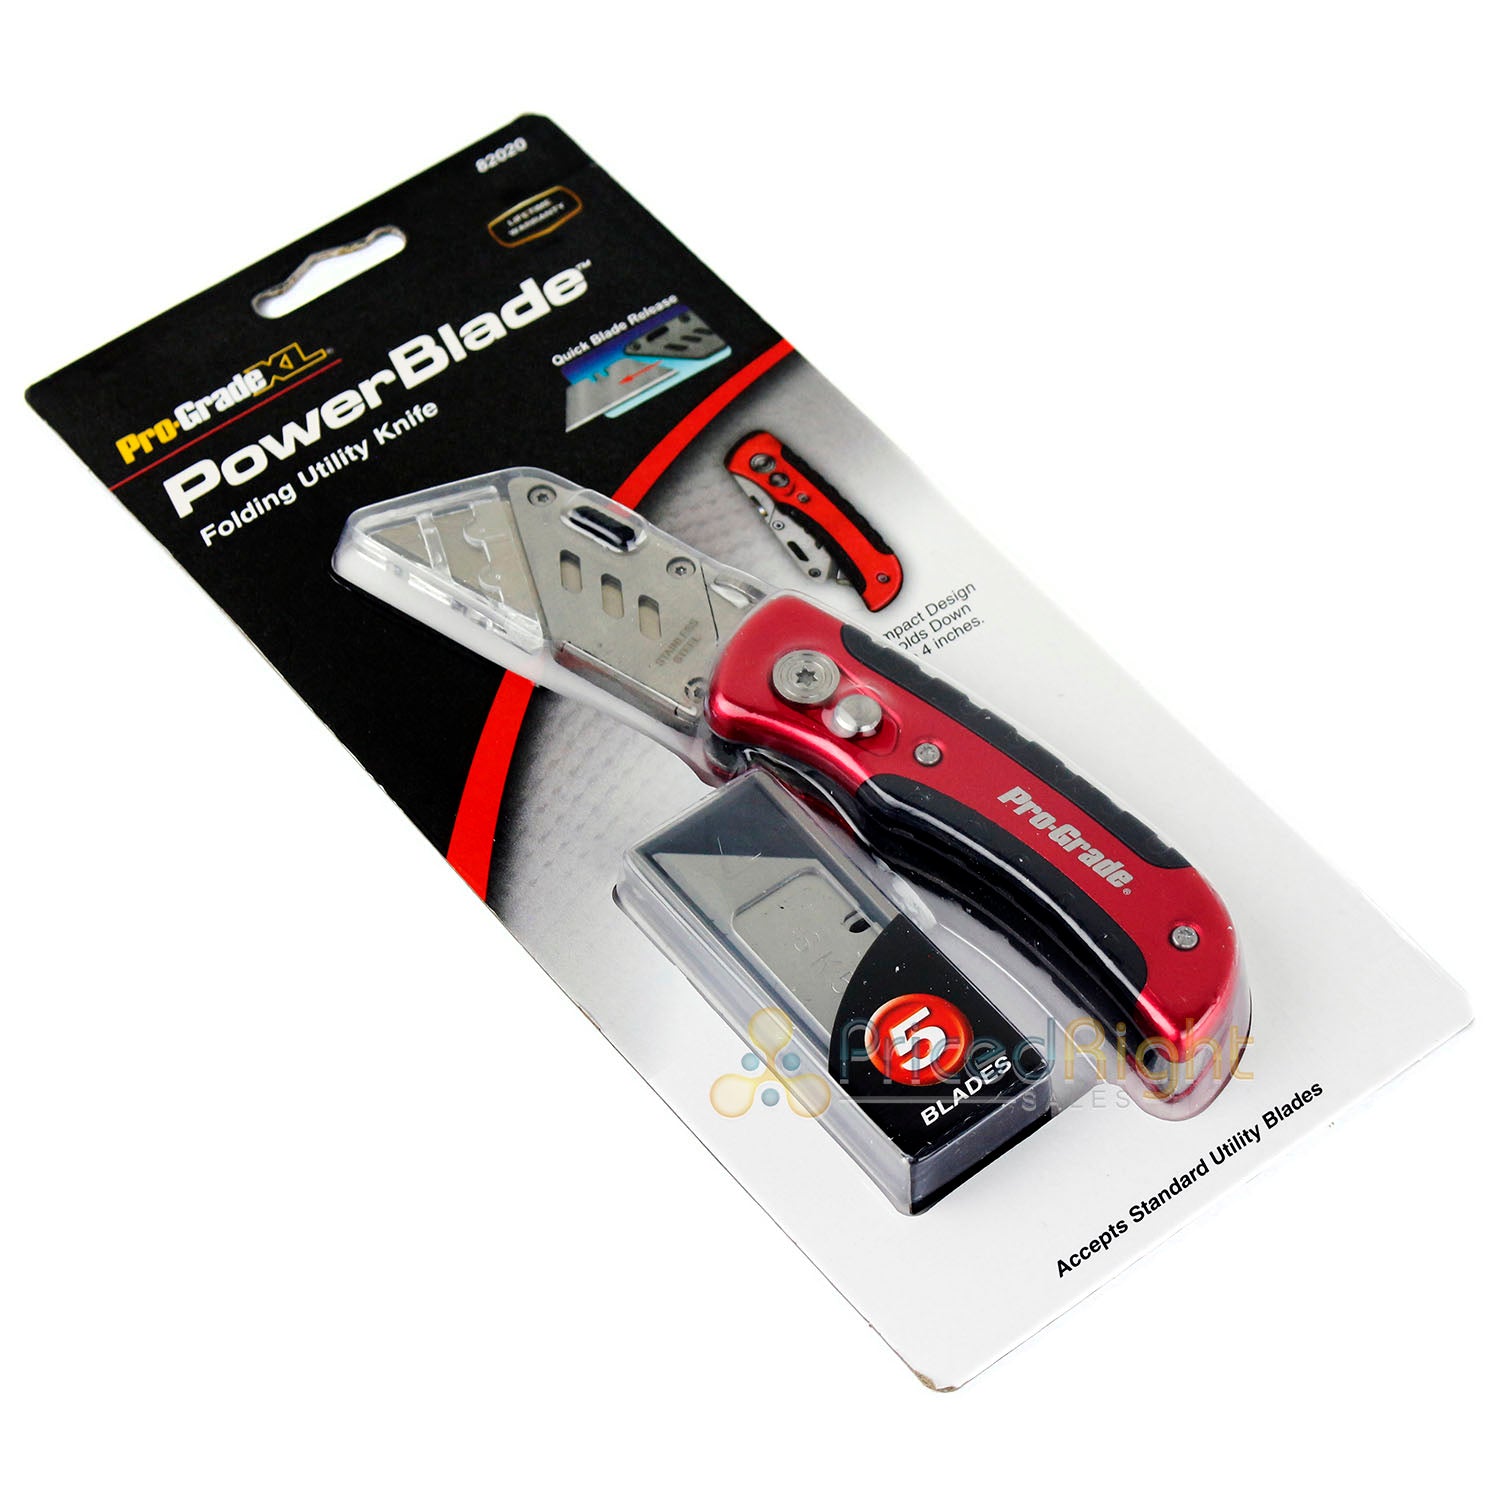 Pro-Grade XL PowerBlade Folding Utility Knife Compact Lightweight 82020